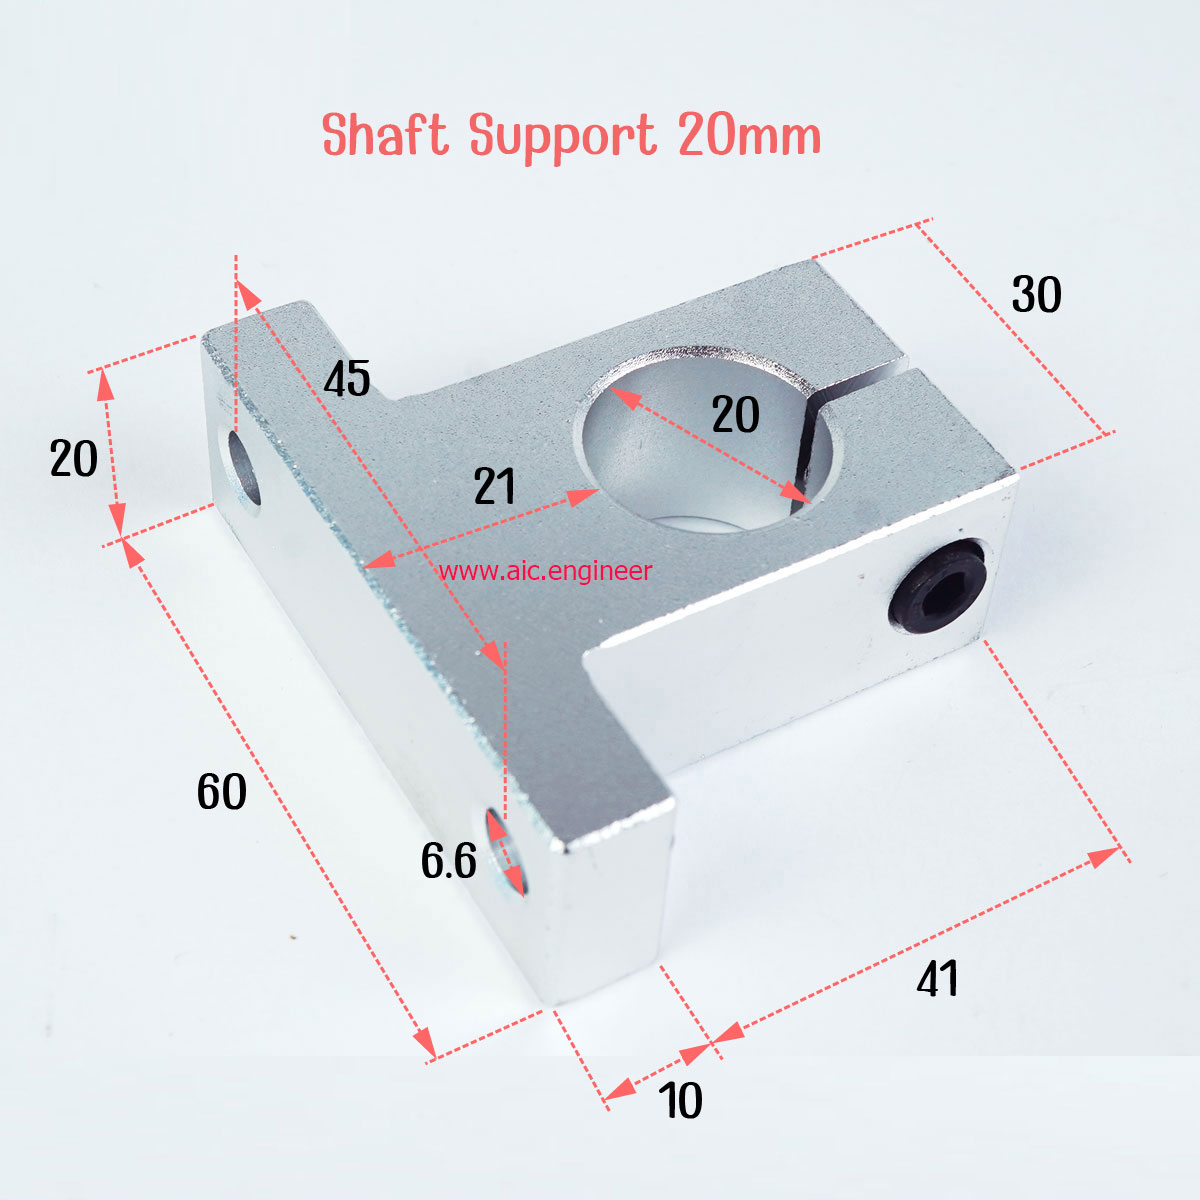 Shaft Support 20mm